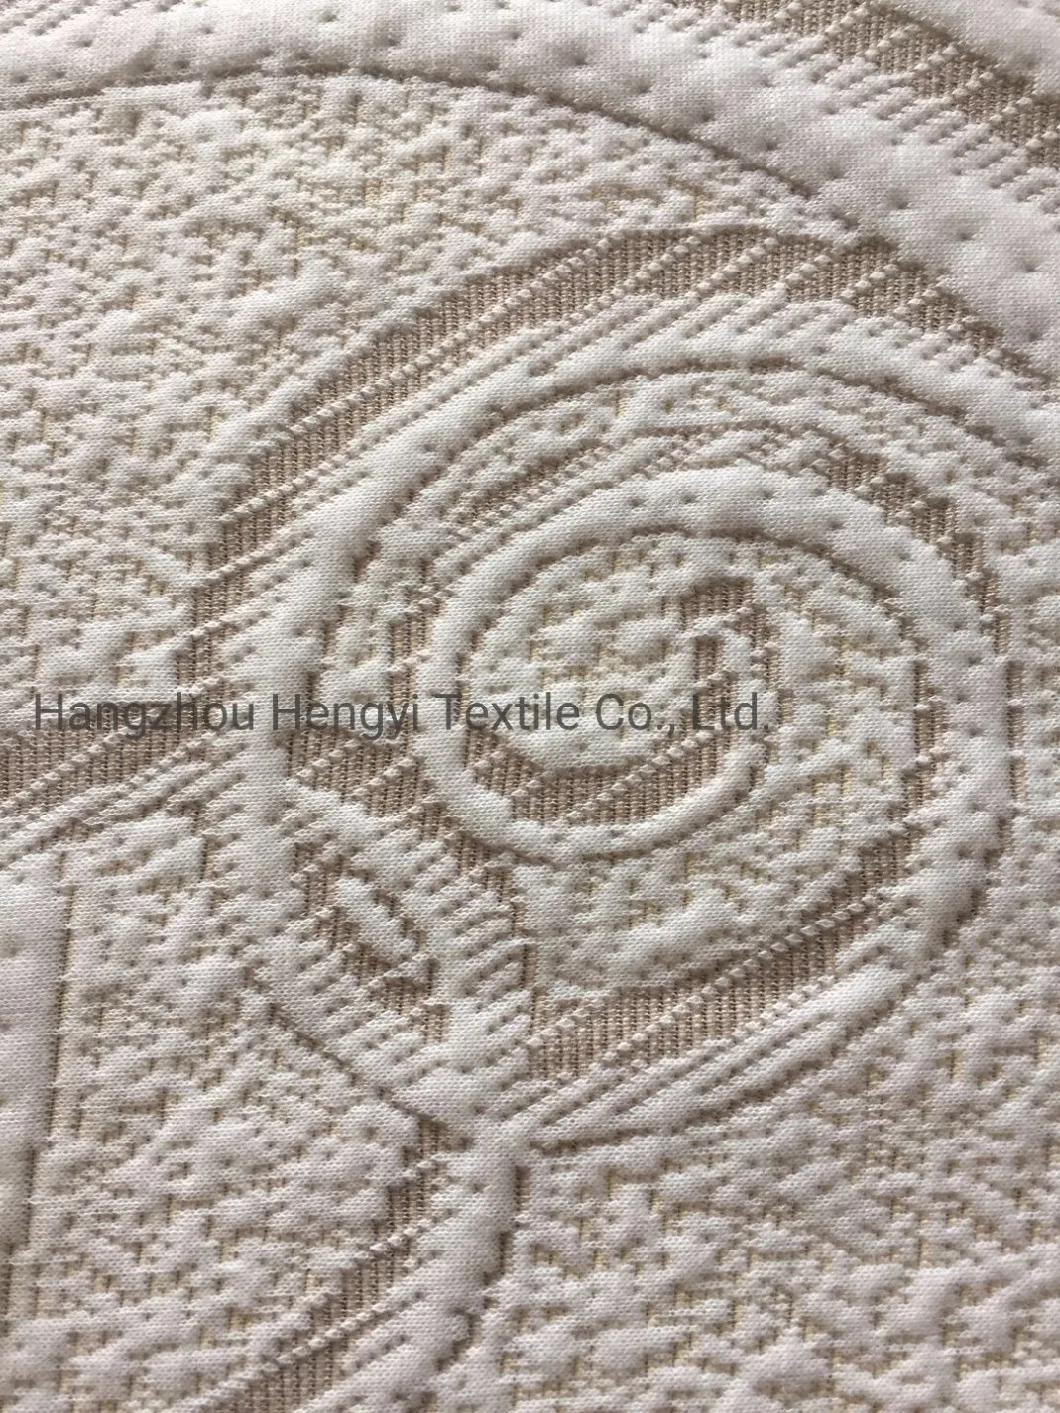 Brown and White Circular Line Irregular Pattern Mattress fabric for Furniture